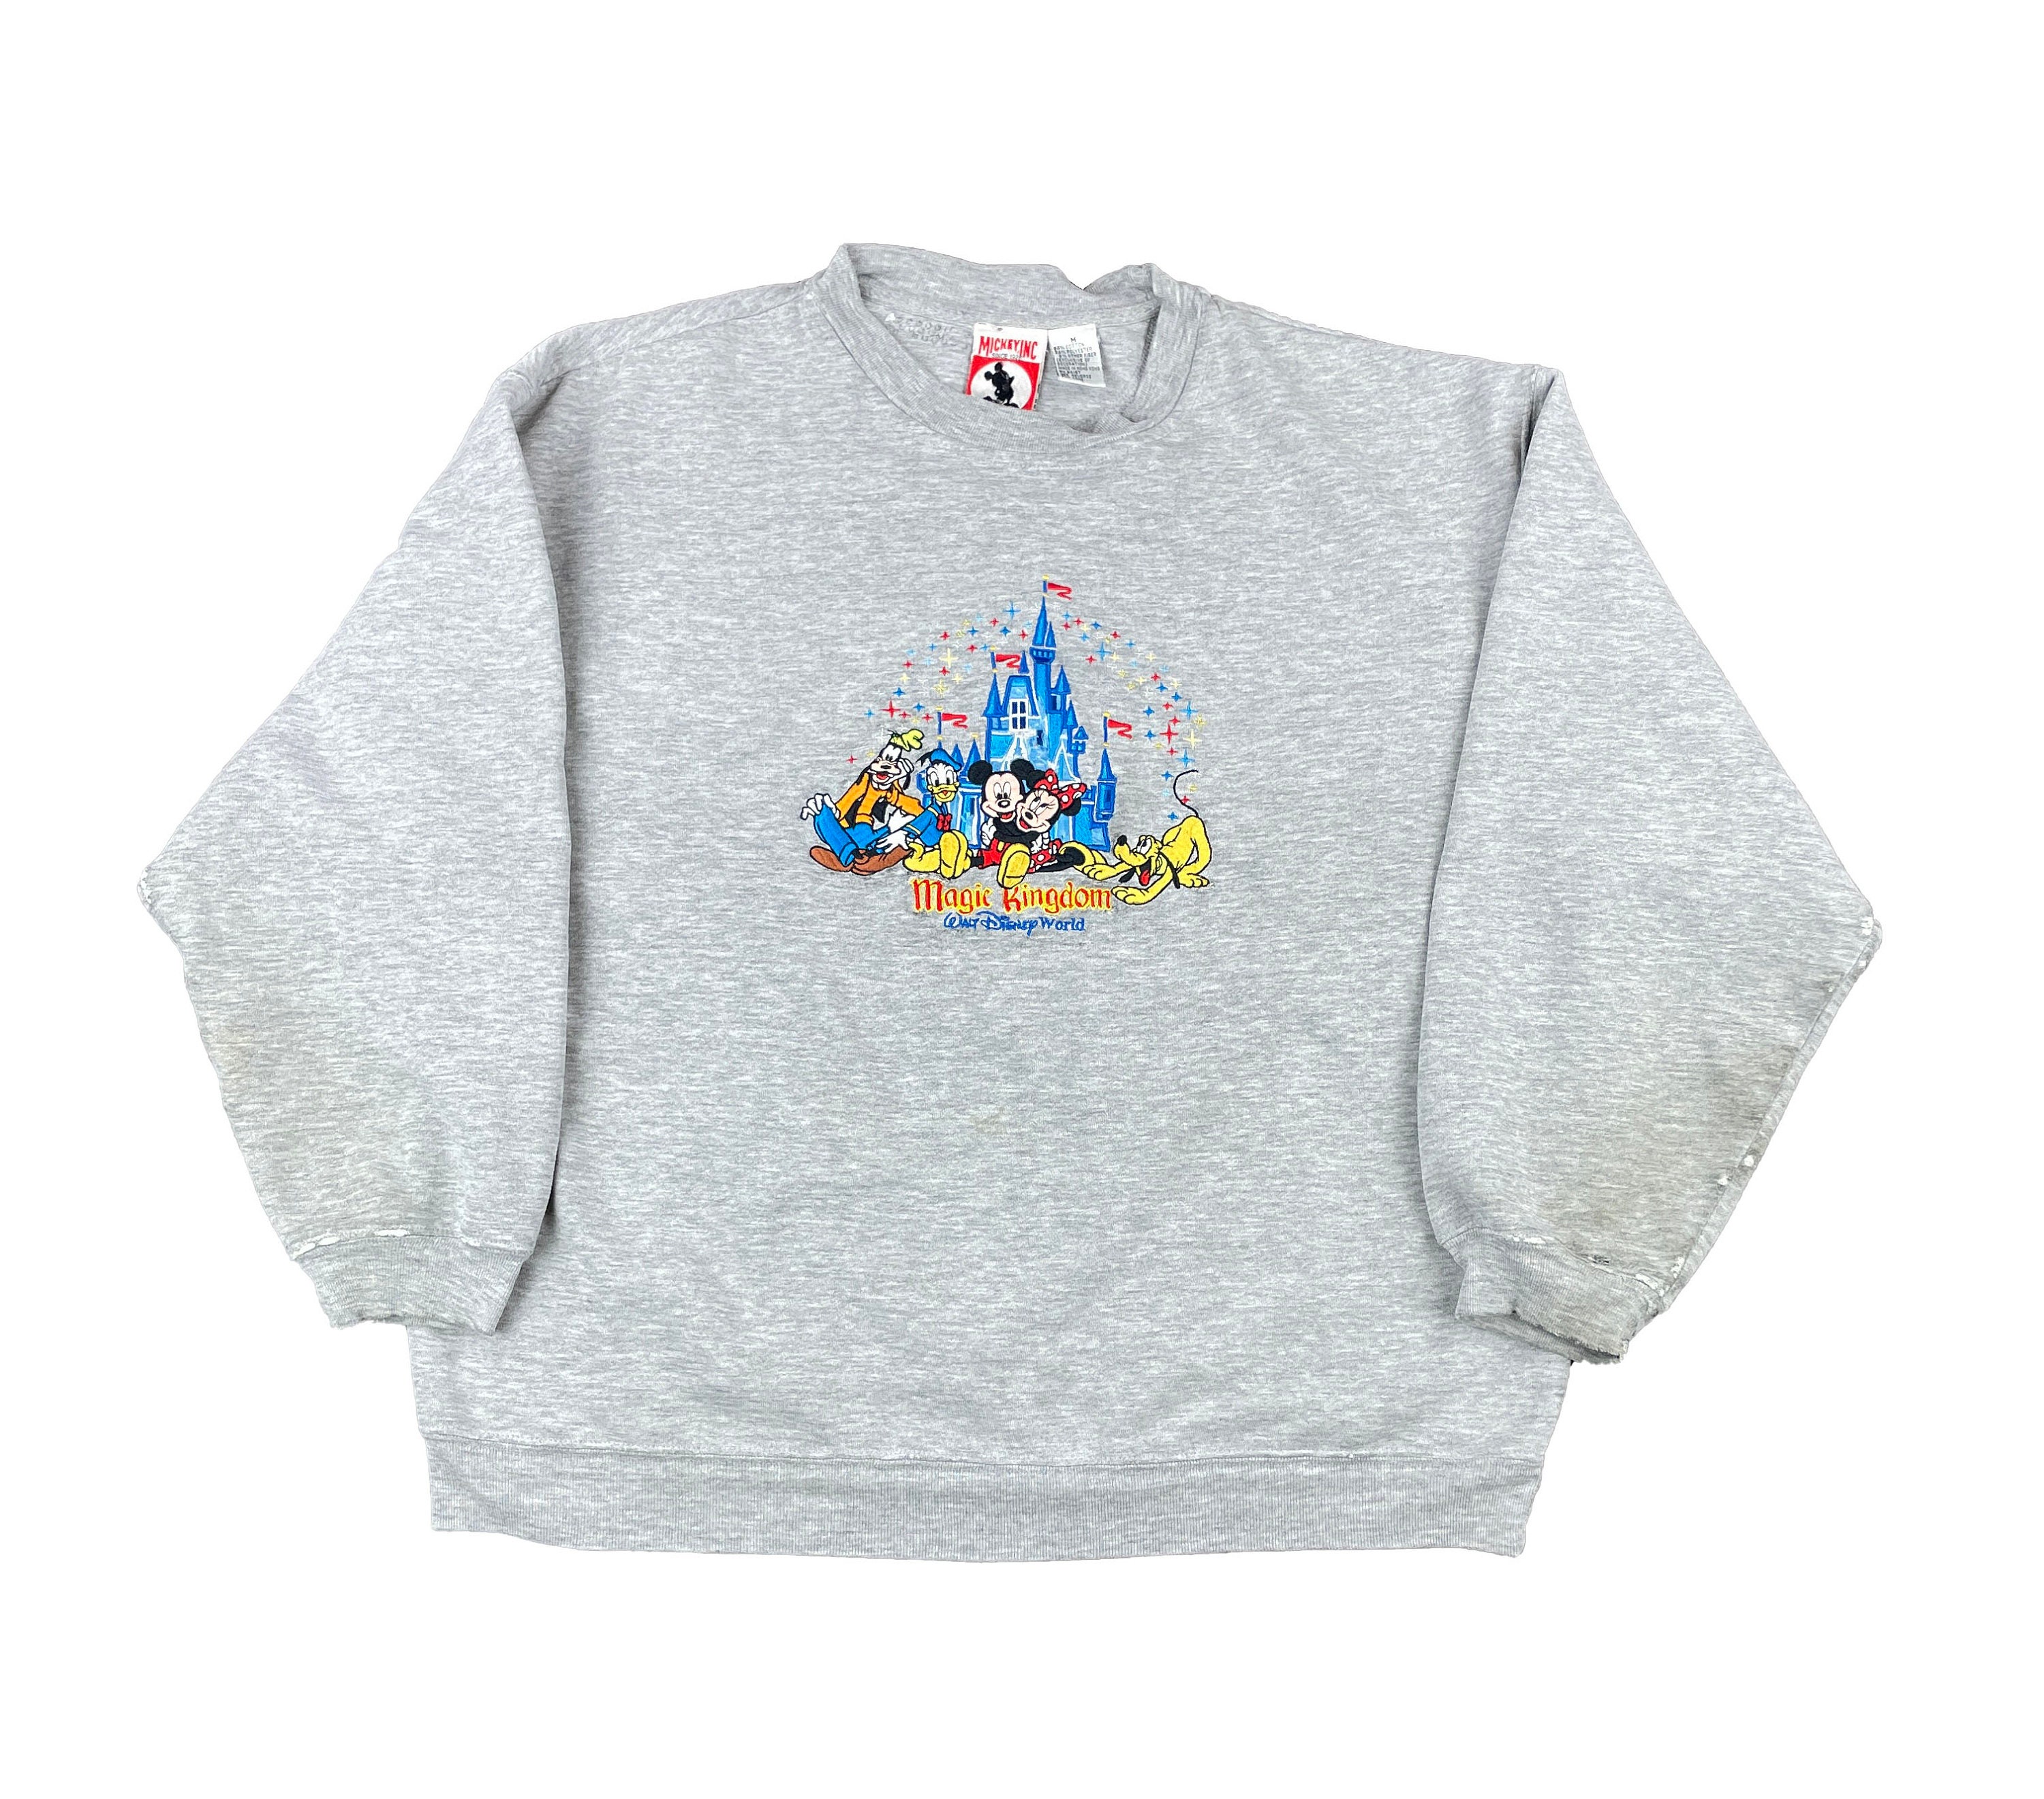  Retro Mickey And Friends Disneyland Est 1955 Sweatshirt, Family  Vacation Sweatshirt, Sweatshirts For Women, Crewneck Sweater, Disneyland  Sweatshirts For Women : Handmade Products